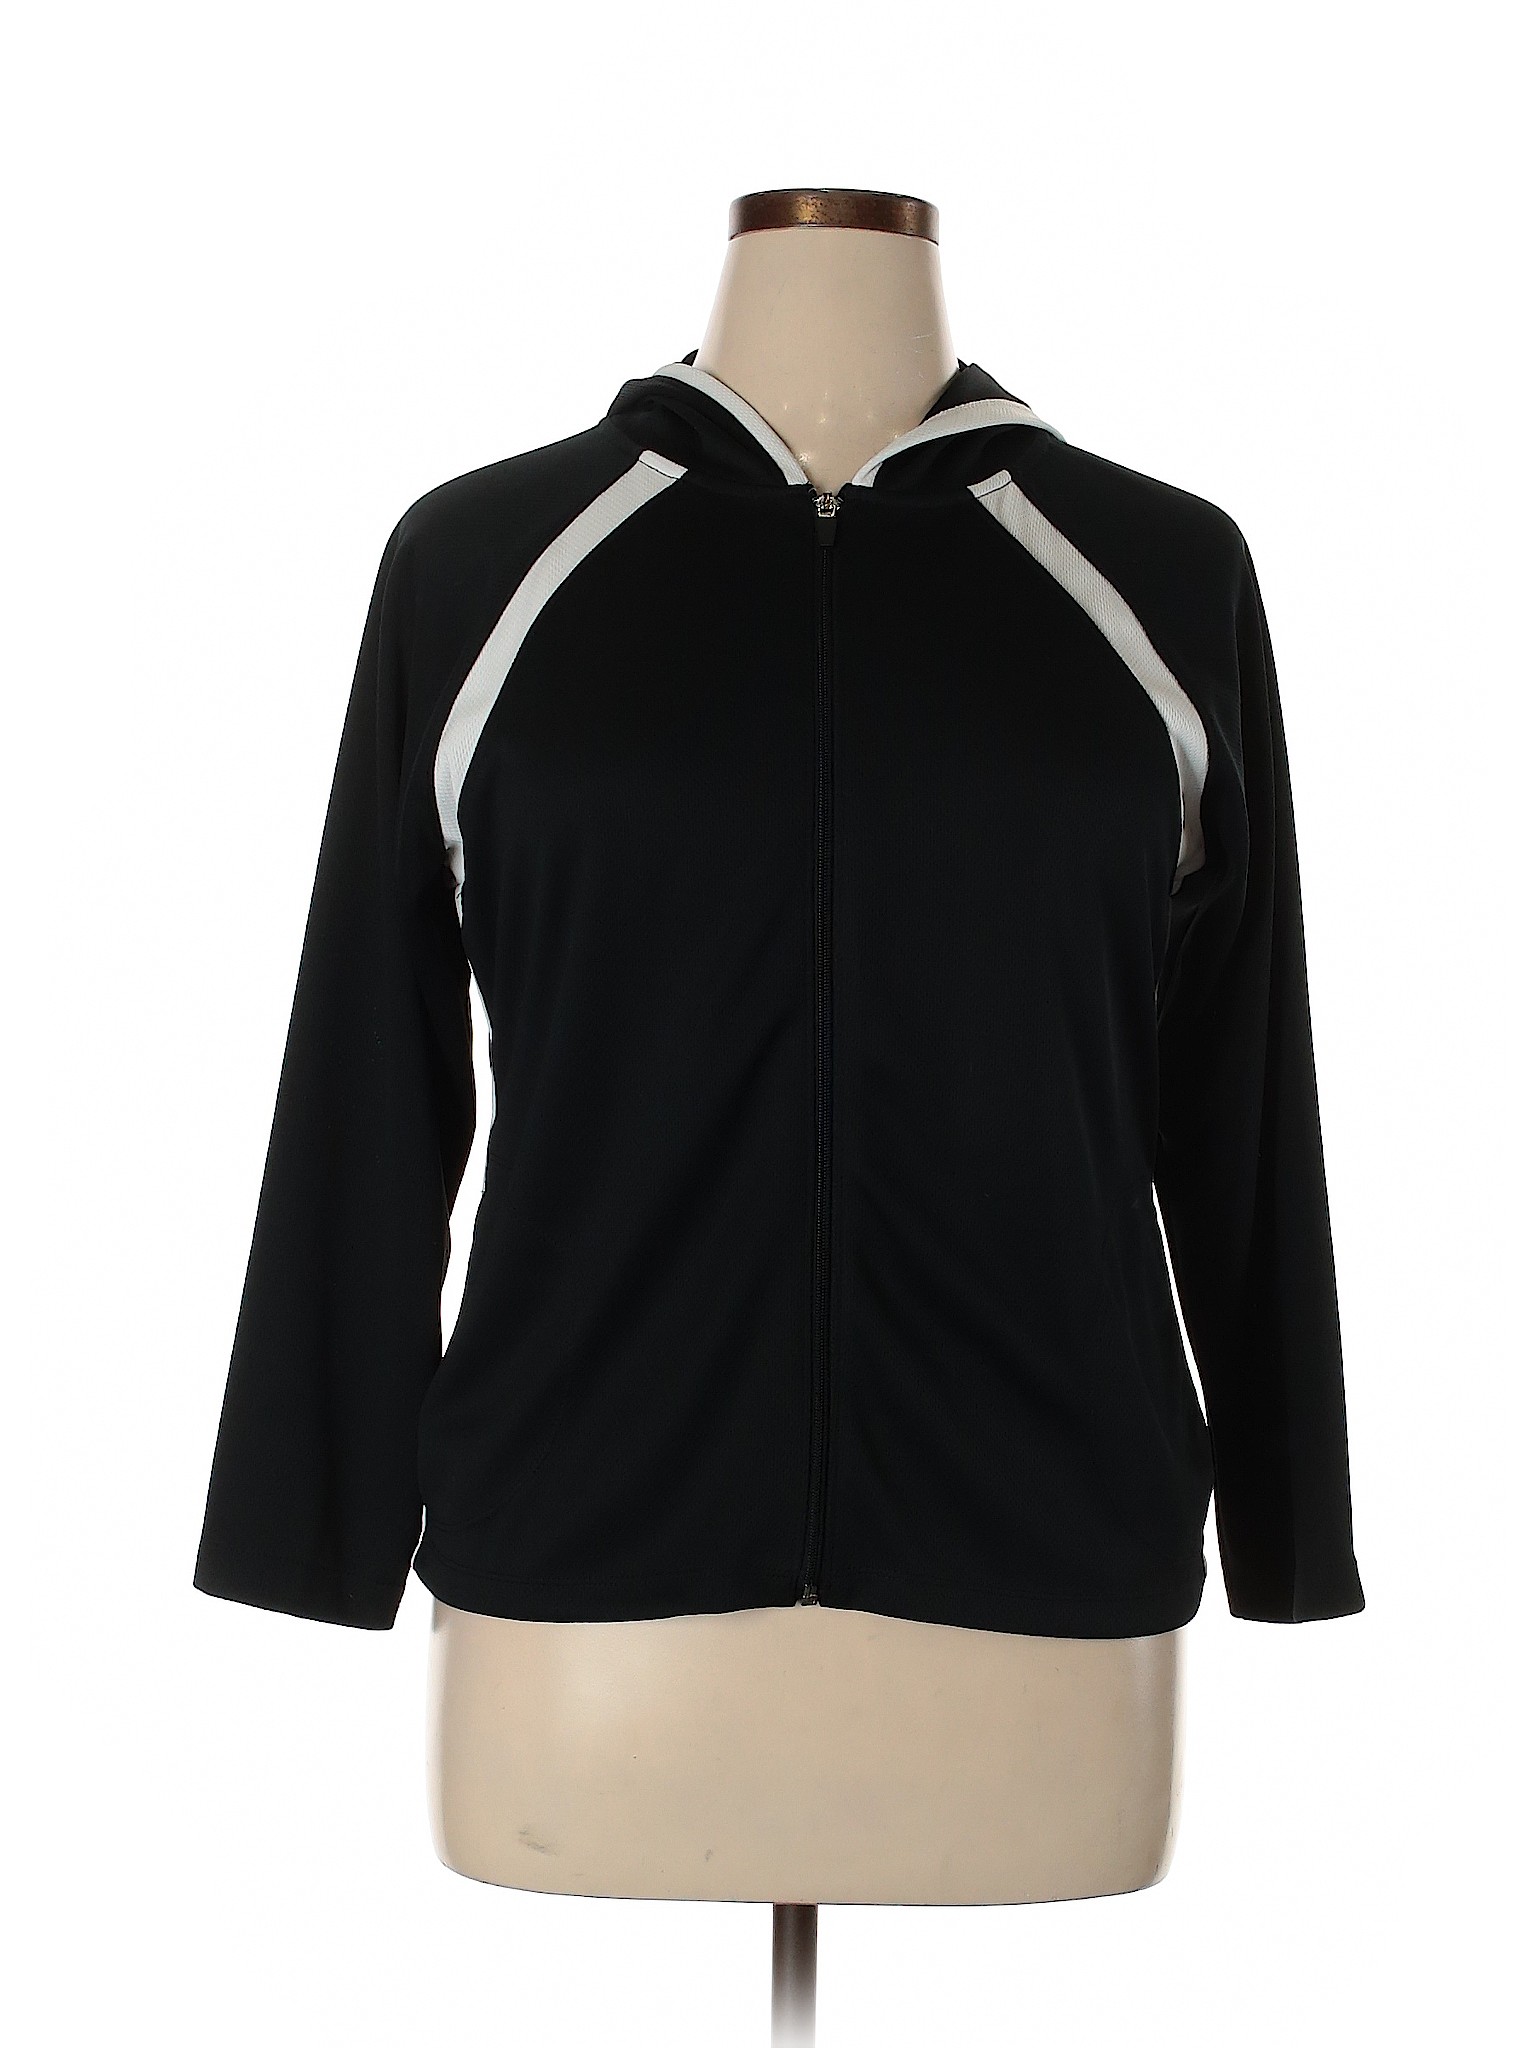 C9 By Champion Women Black Track Jacket XL | eBay